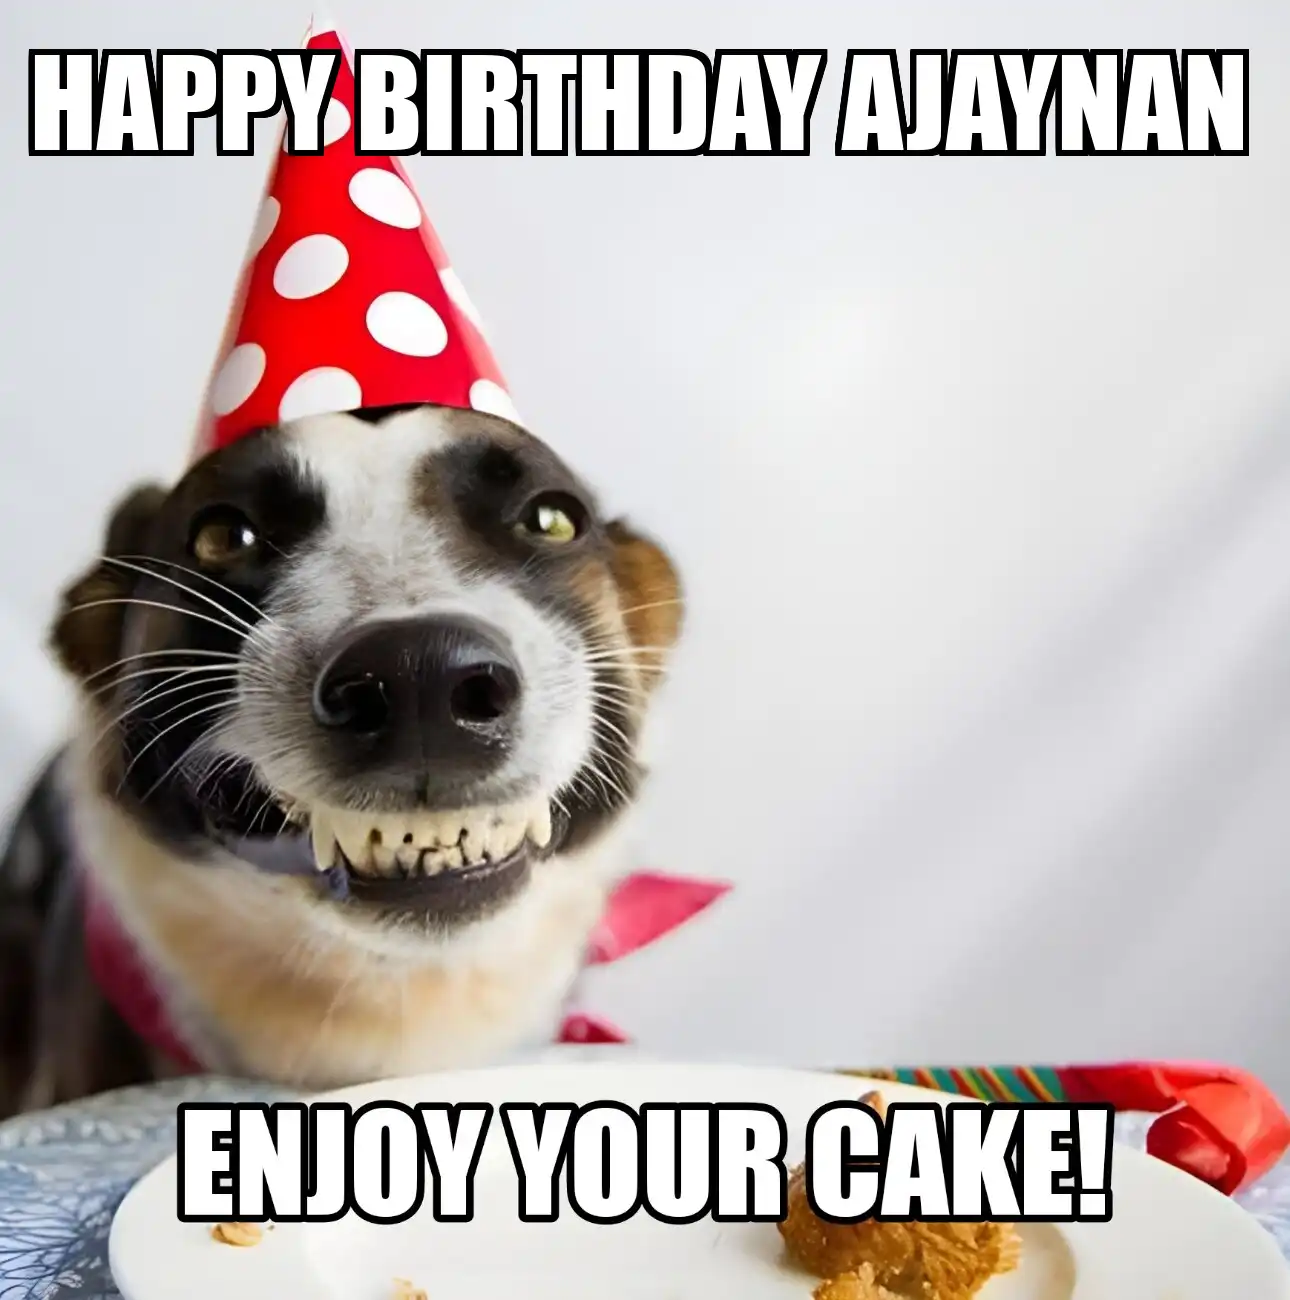 Happy Birthday Ajaynan Enjoy Your Cake Dog Meme